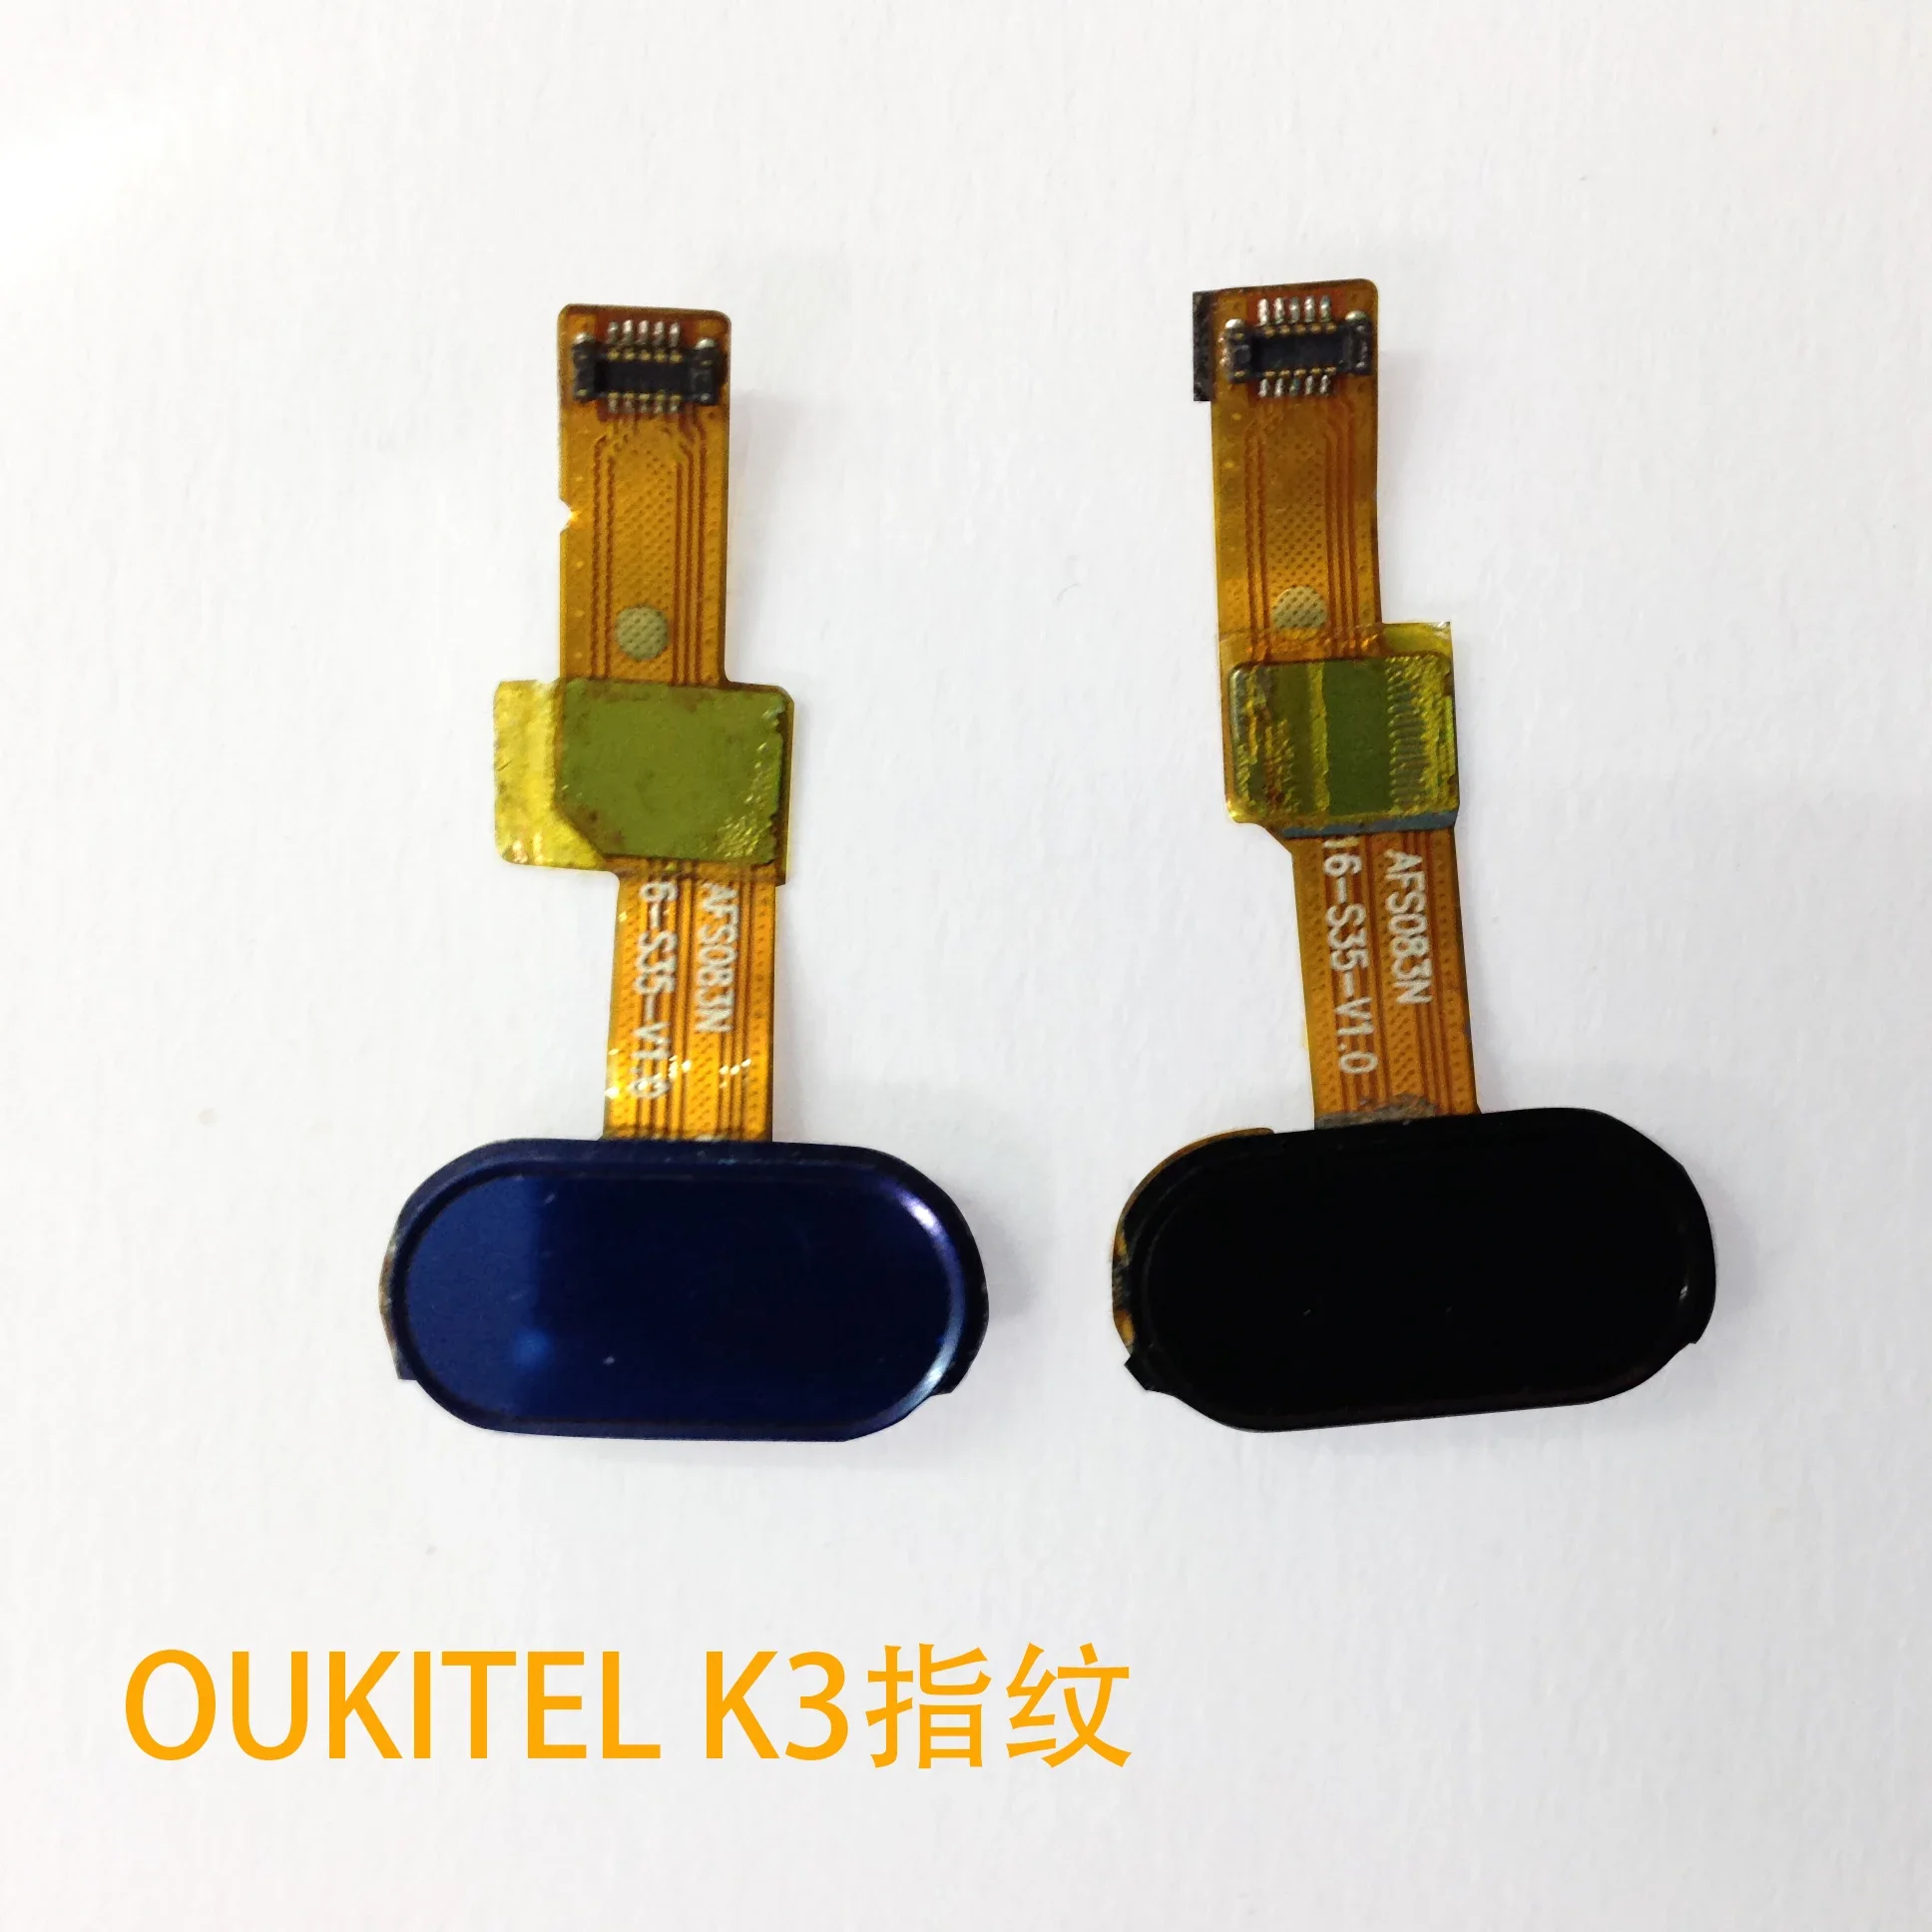 

Original OUKITEL K3 fingerprint sensor, FPC cable accessories,Tested